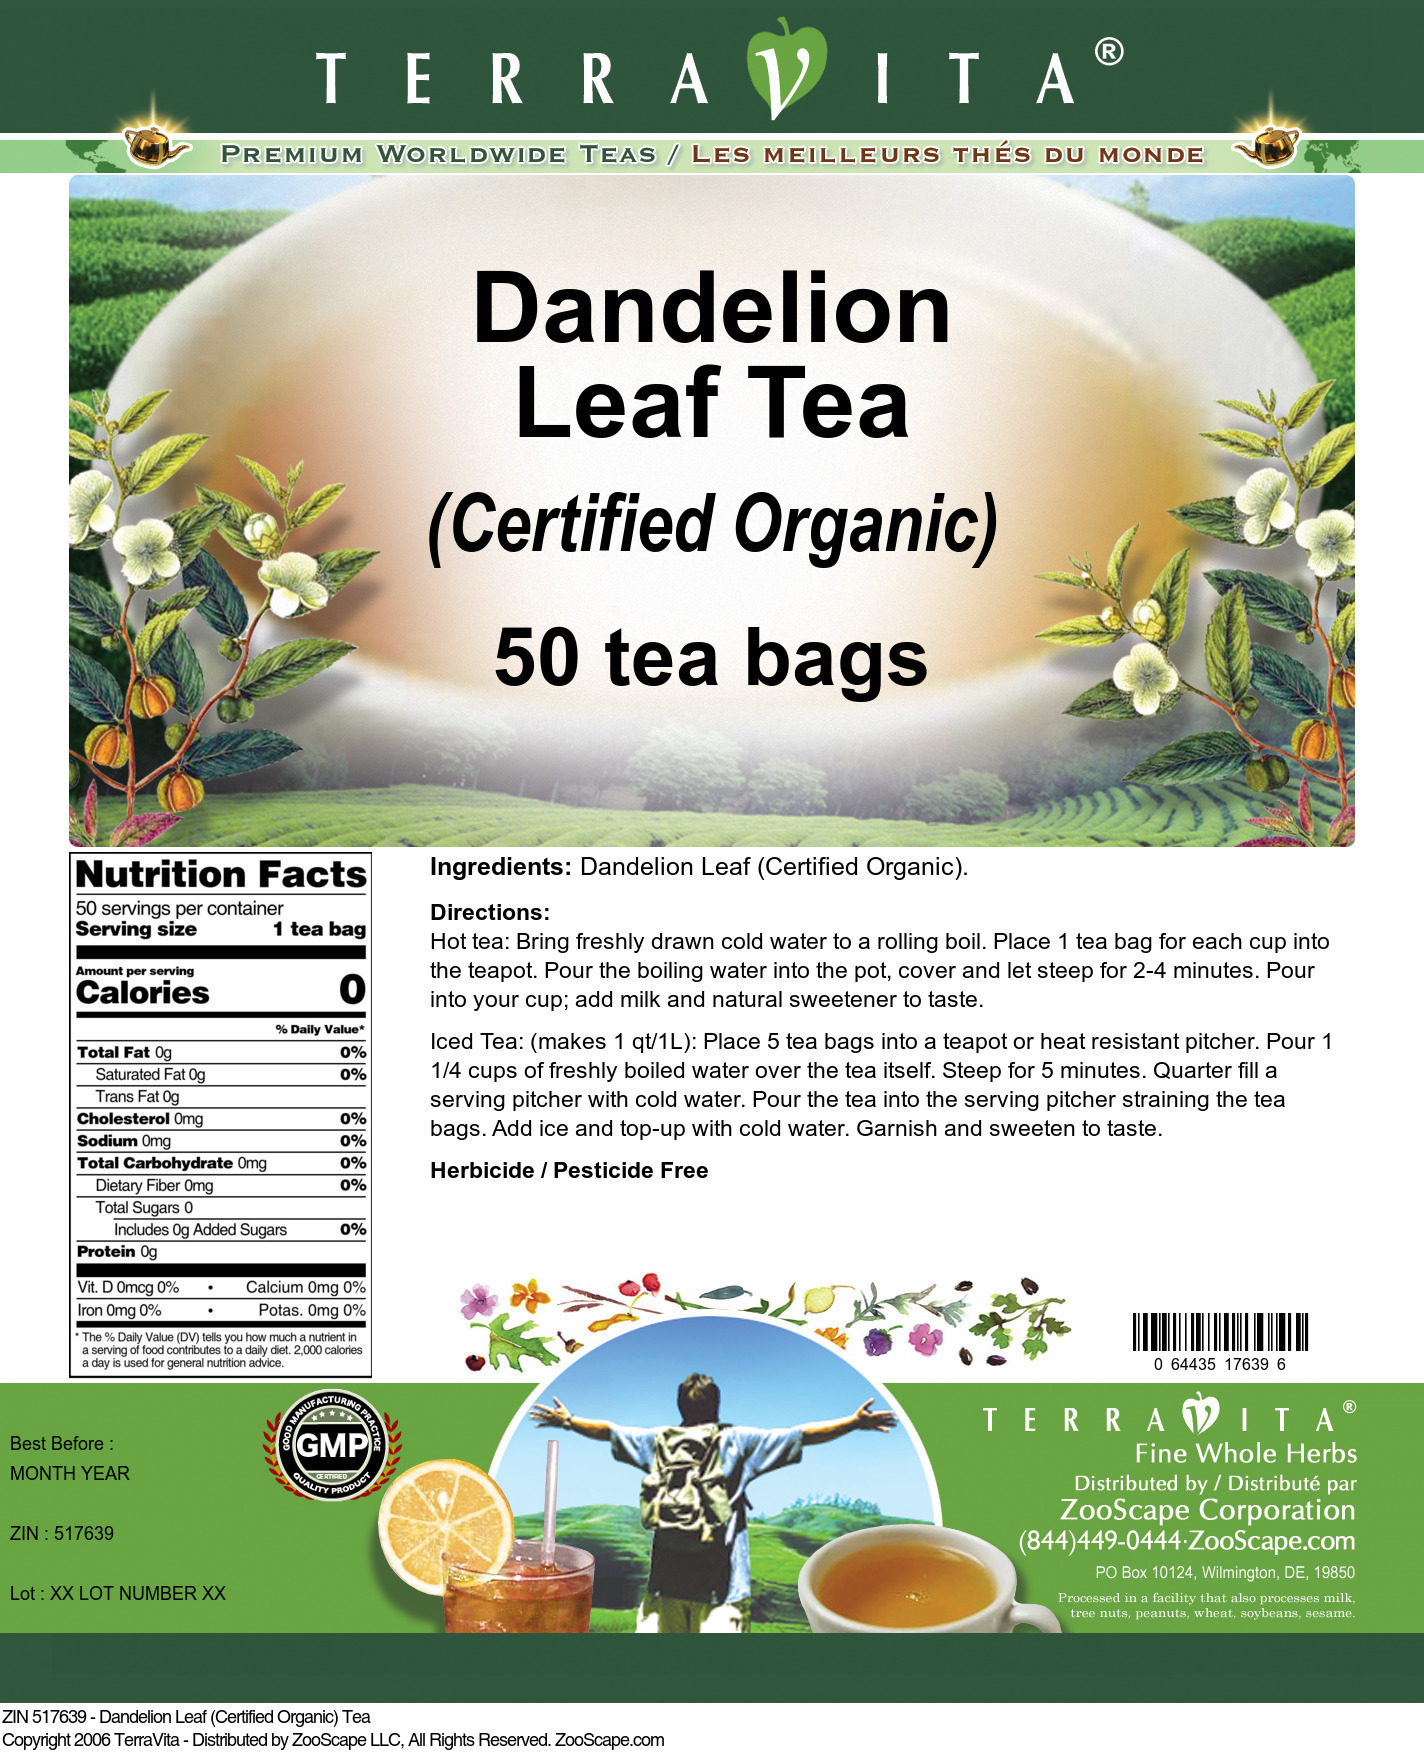 Dandelion Leaf (Certified Organic) Tea - Label